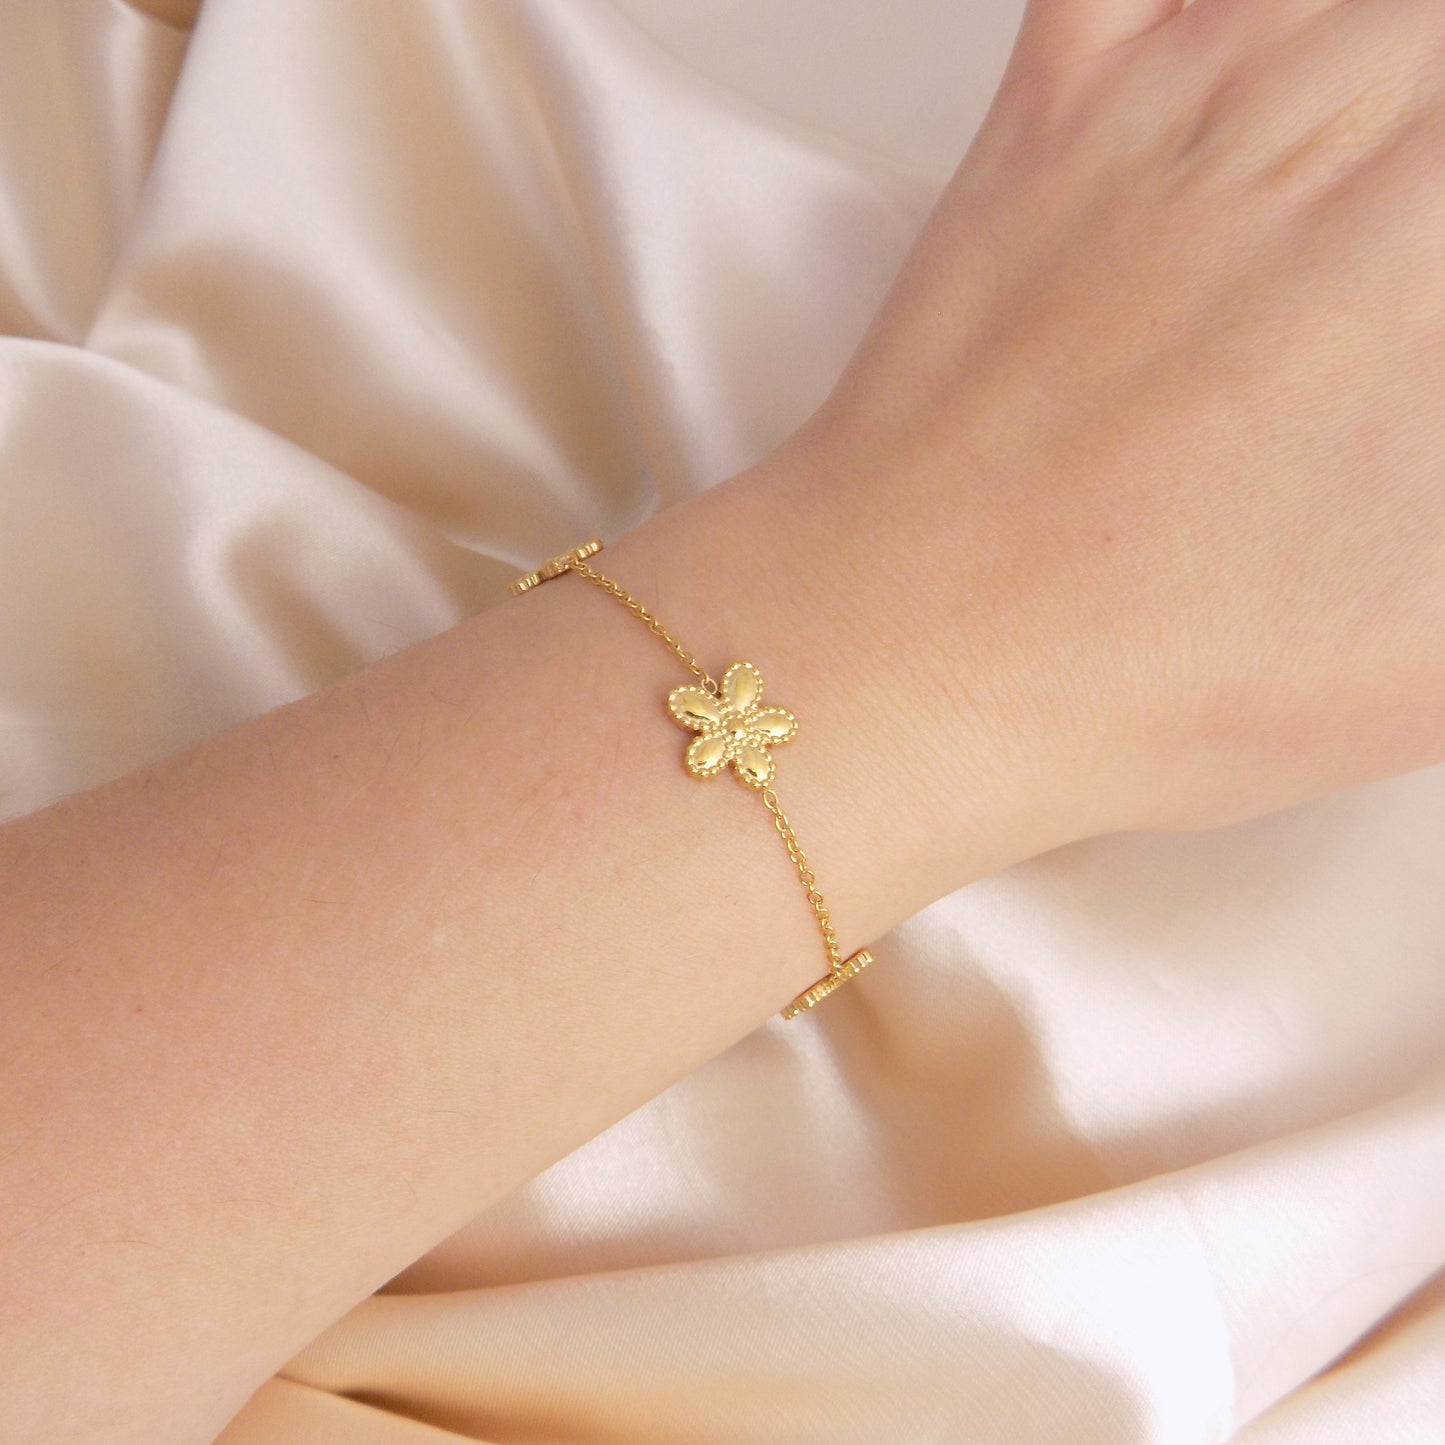 18K Gold Flower Bracelet Stainless Steel - Minimalist Dainty Chain Adjustable